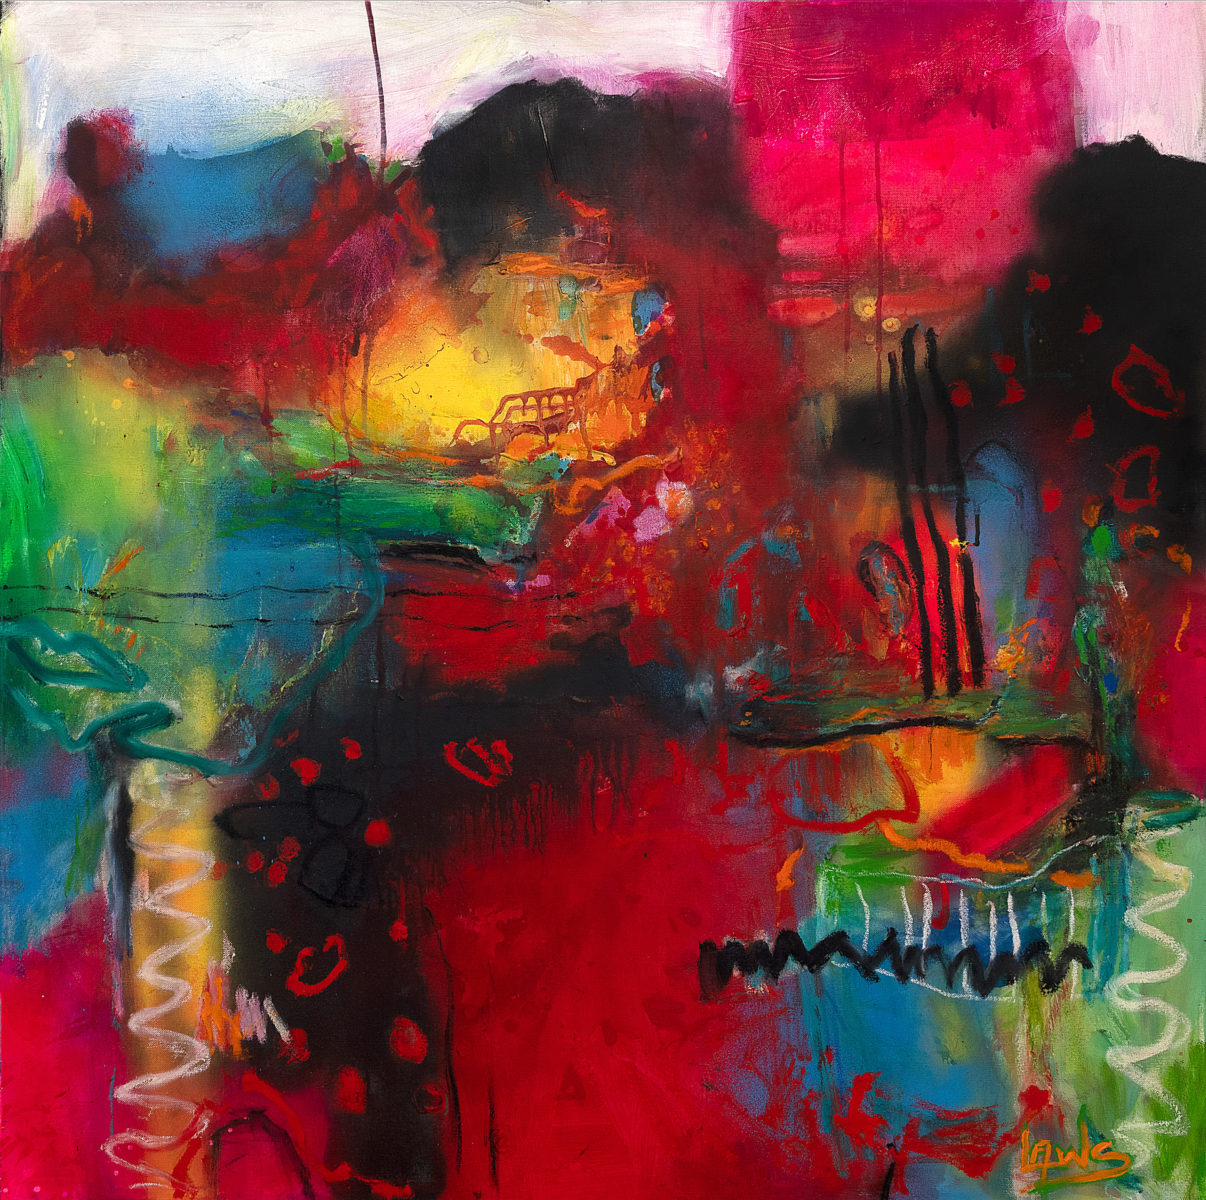 Summer Glaze | Judith Laws | Mixed media on canvas | 101.5 x 101.5 cm | $3500